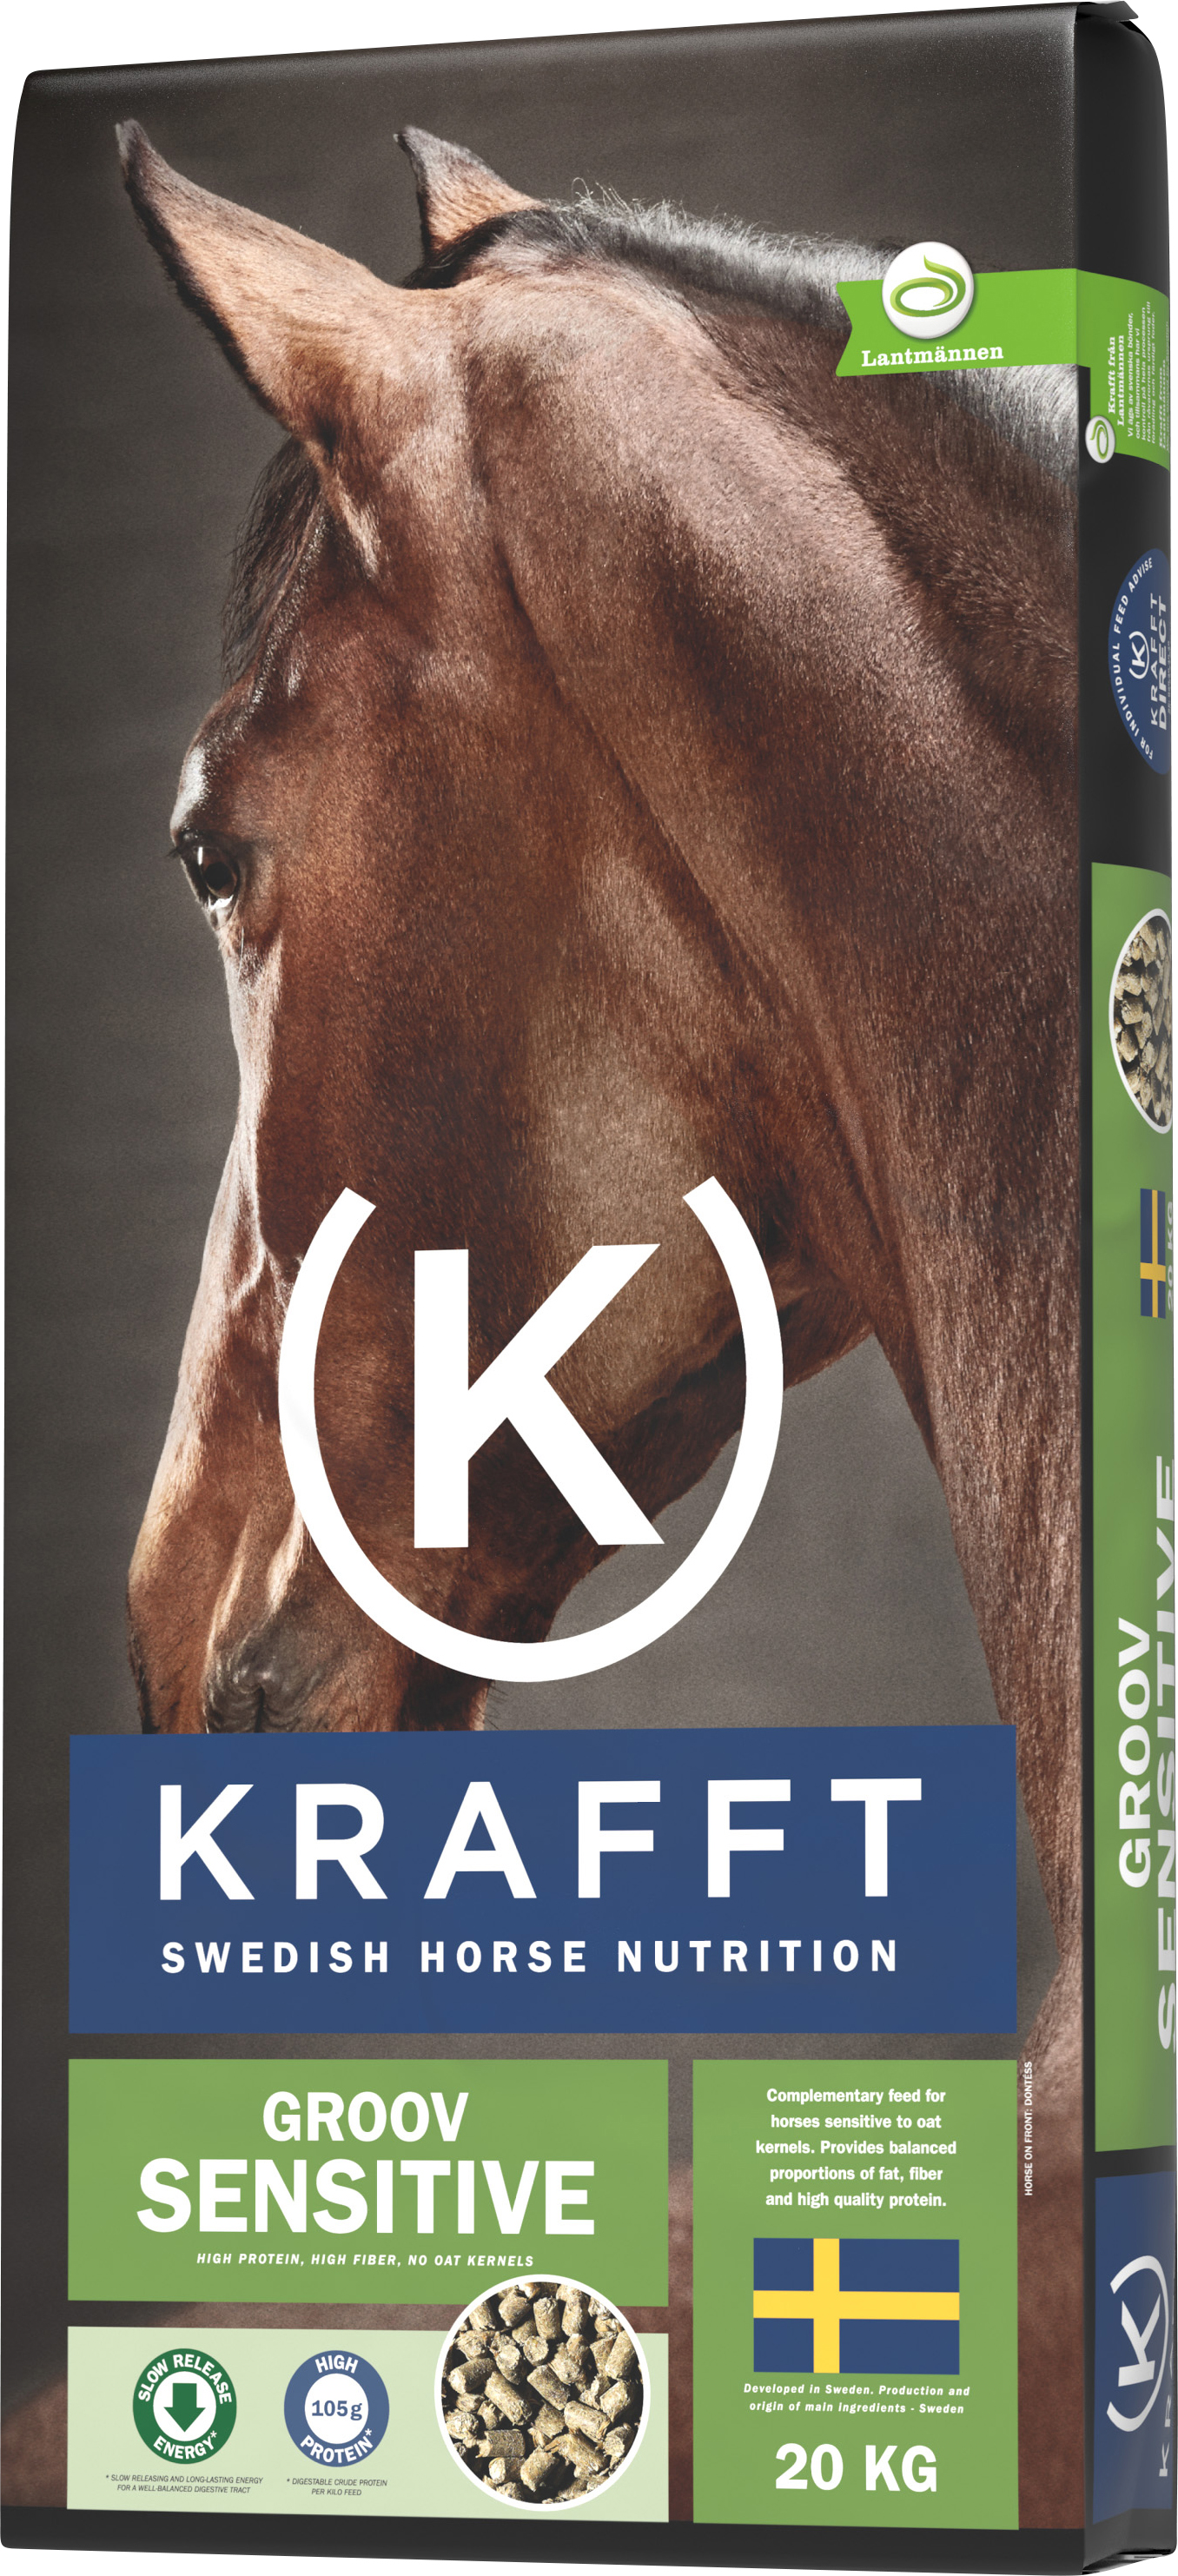 Hästfoder Krafft Groov Sensitive 20kg